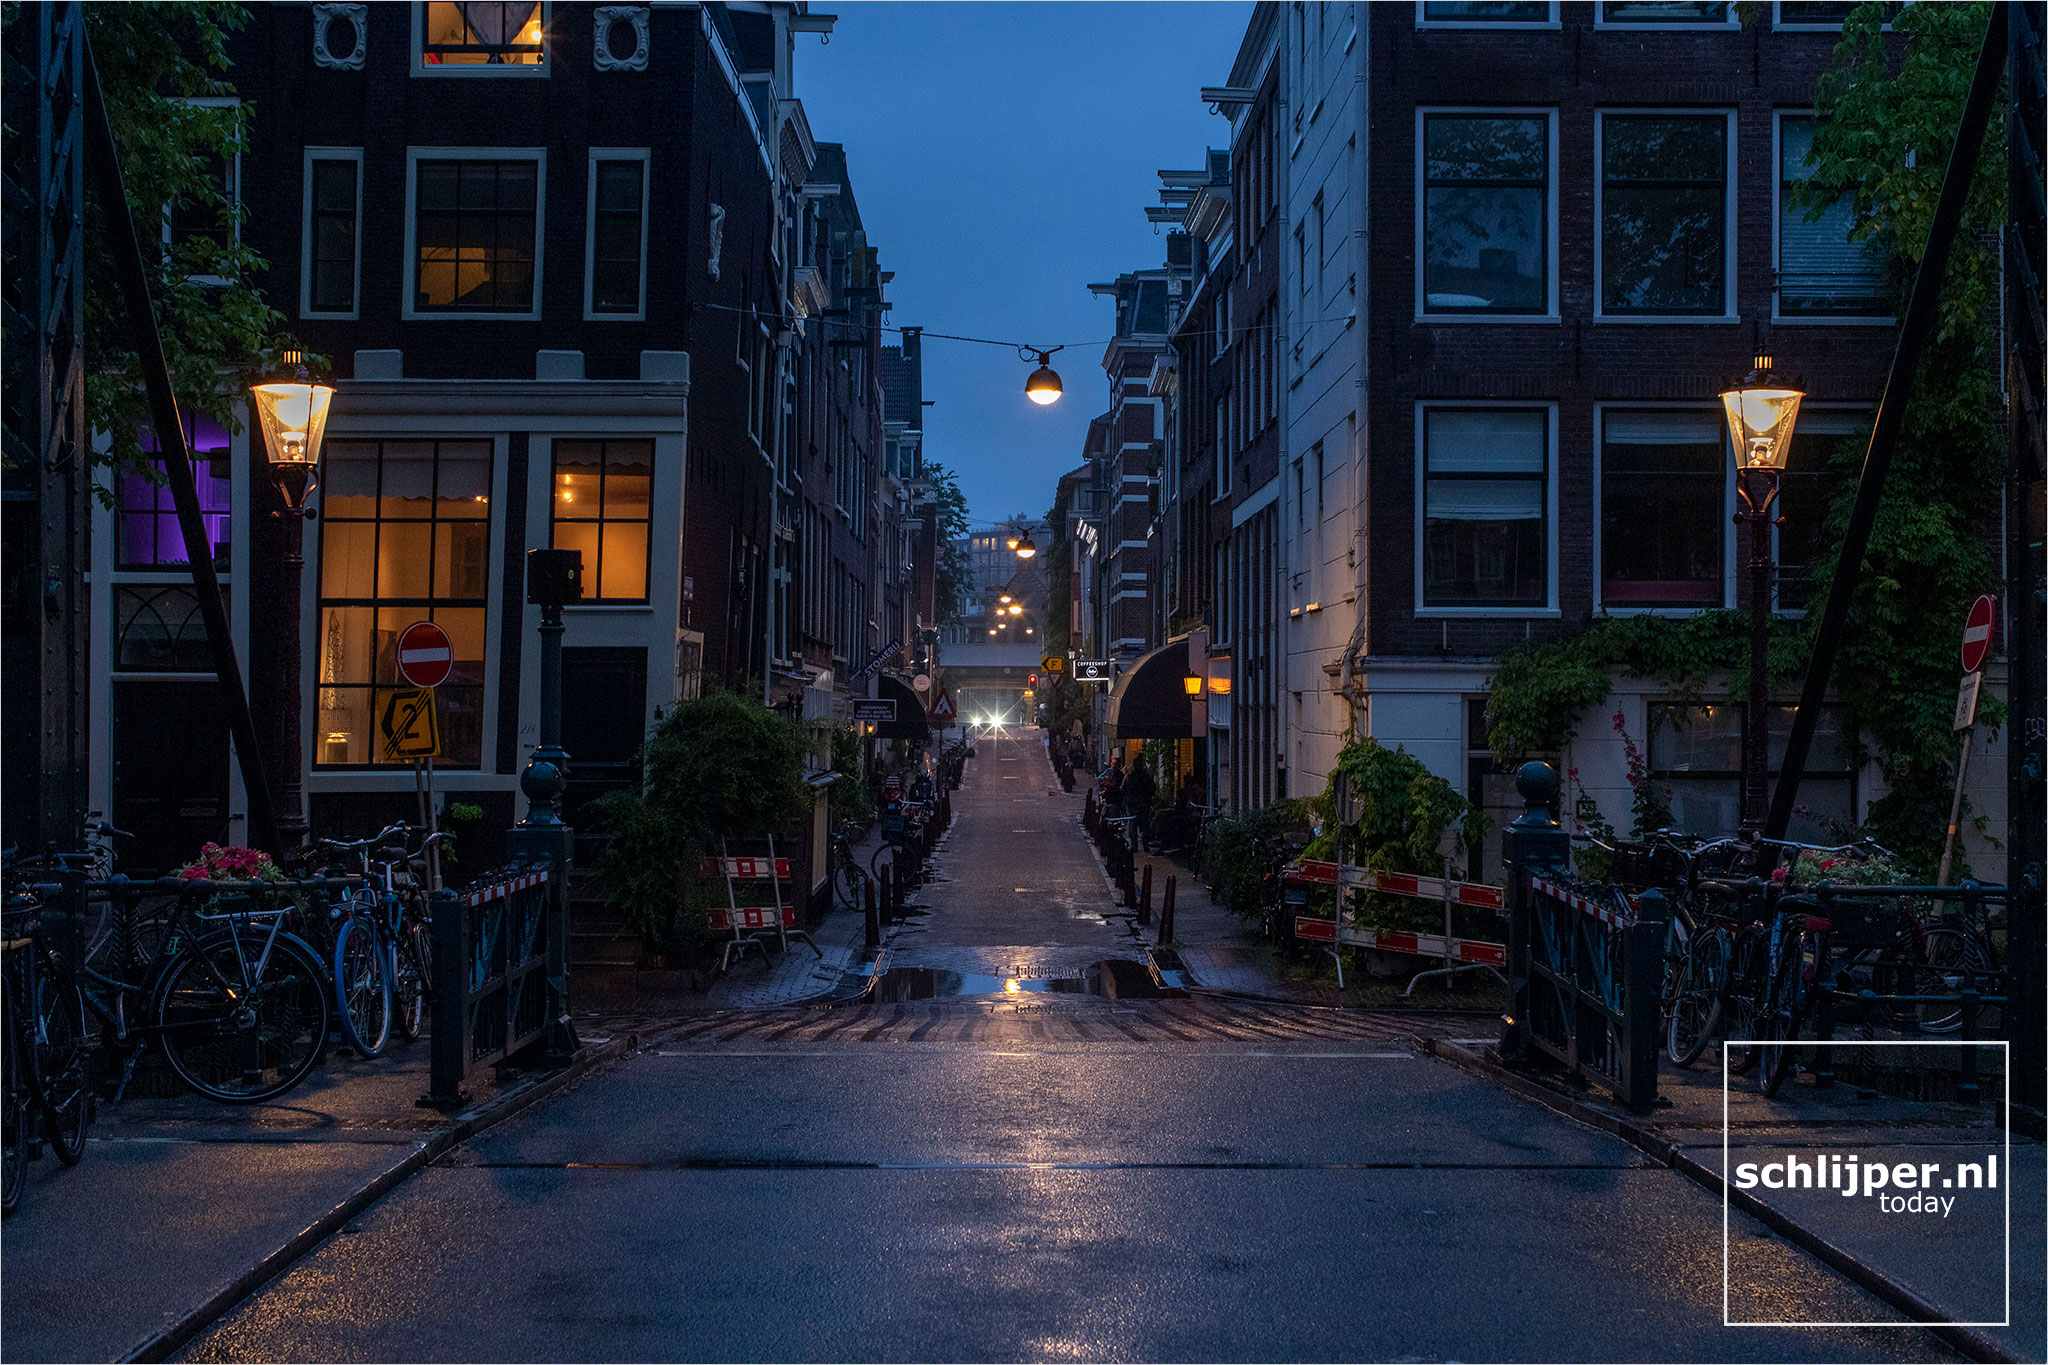 Nederland, Amsterdam, 9 juli 2020